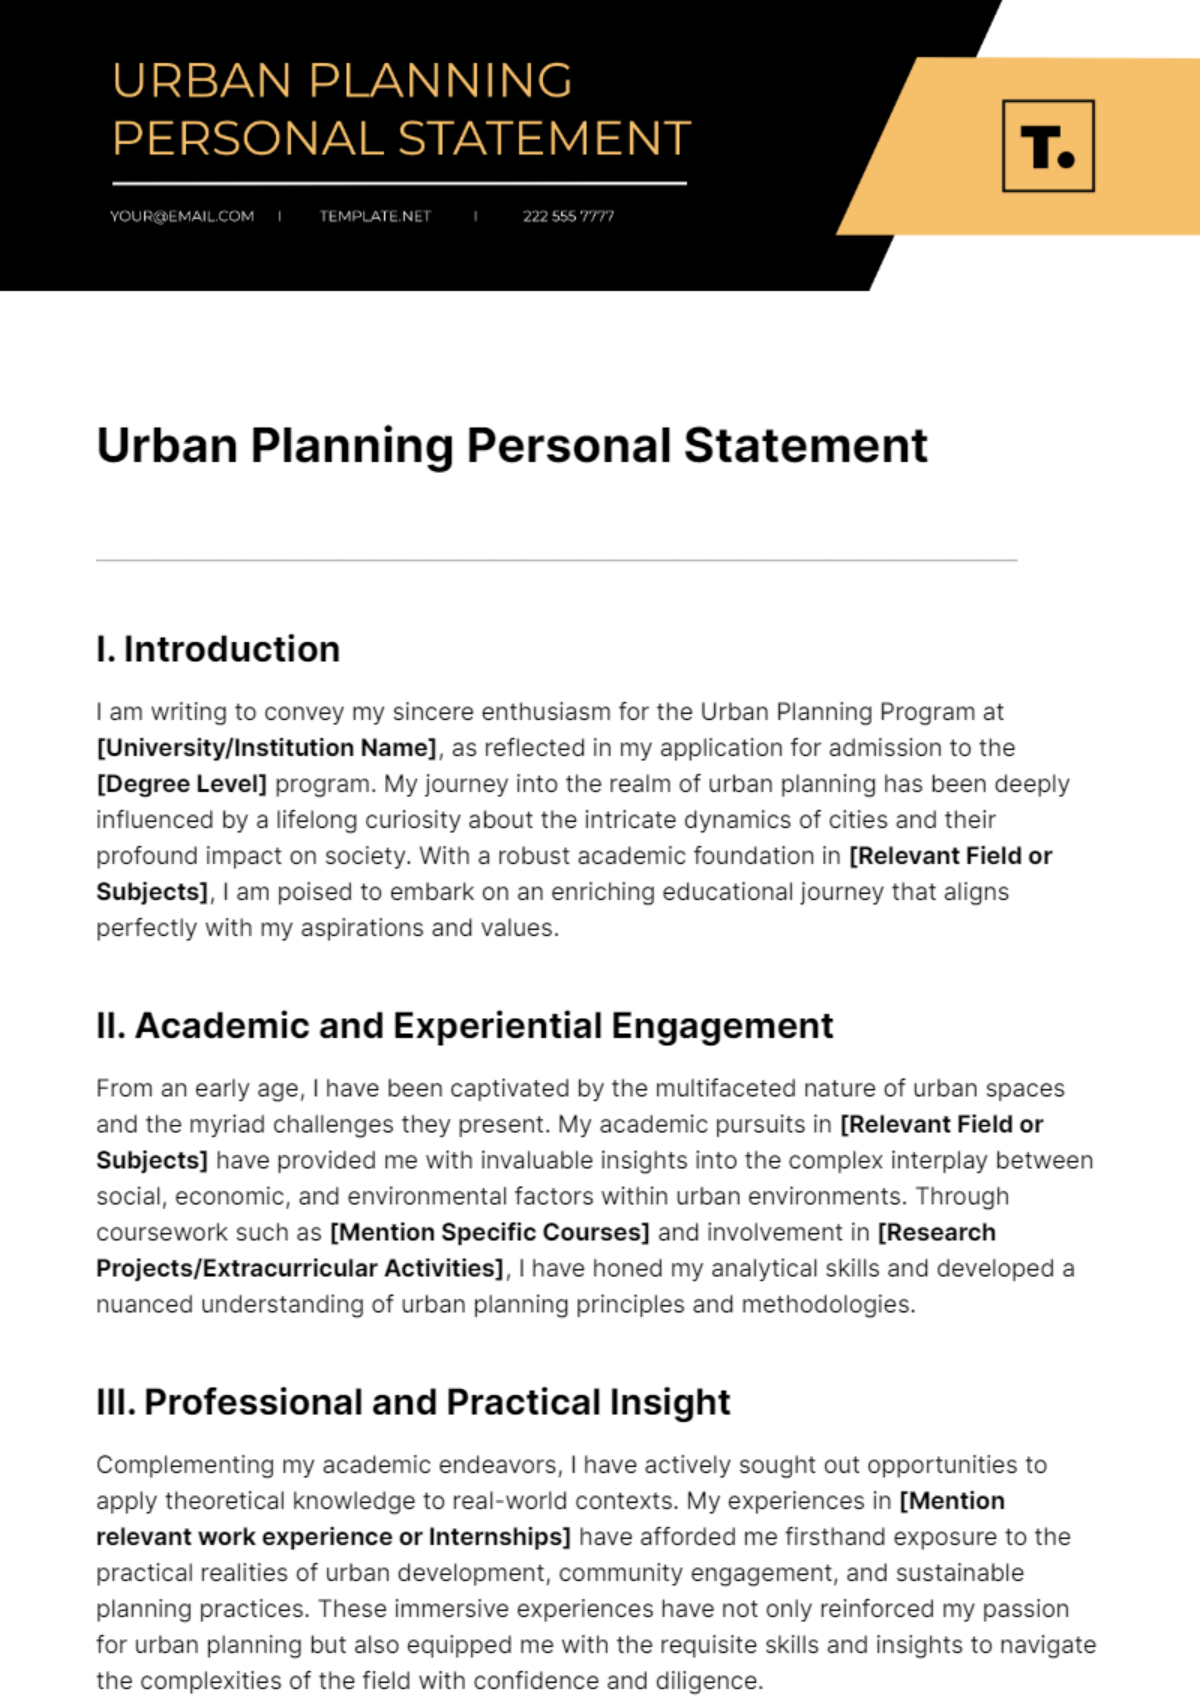 Urban Planning Personal Statement Template